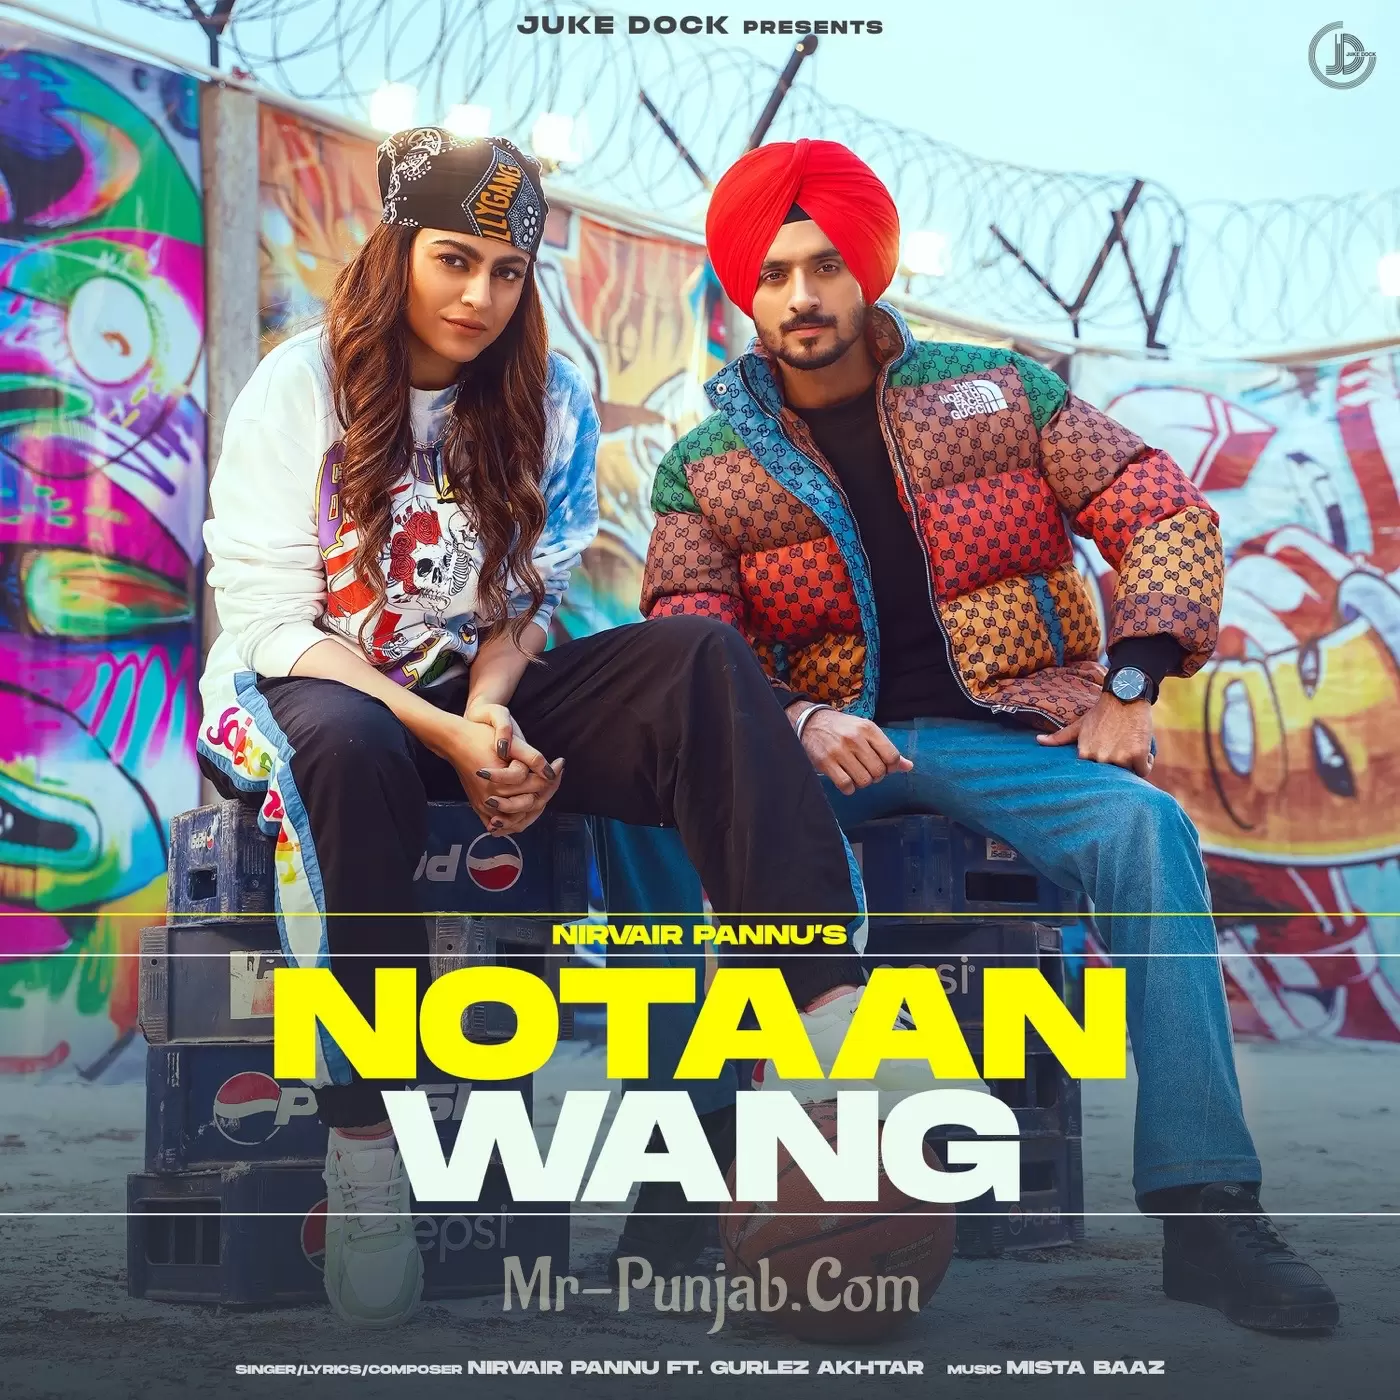 Notaan Wang Nirvair Pannu Mp3 Download Song - Mr-Punjab